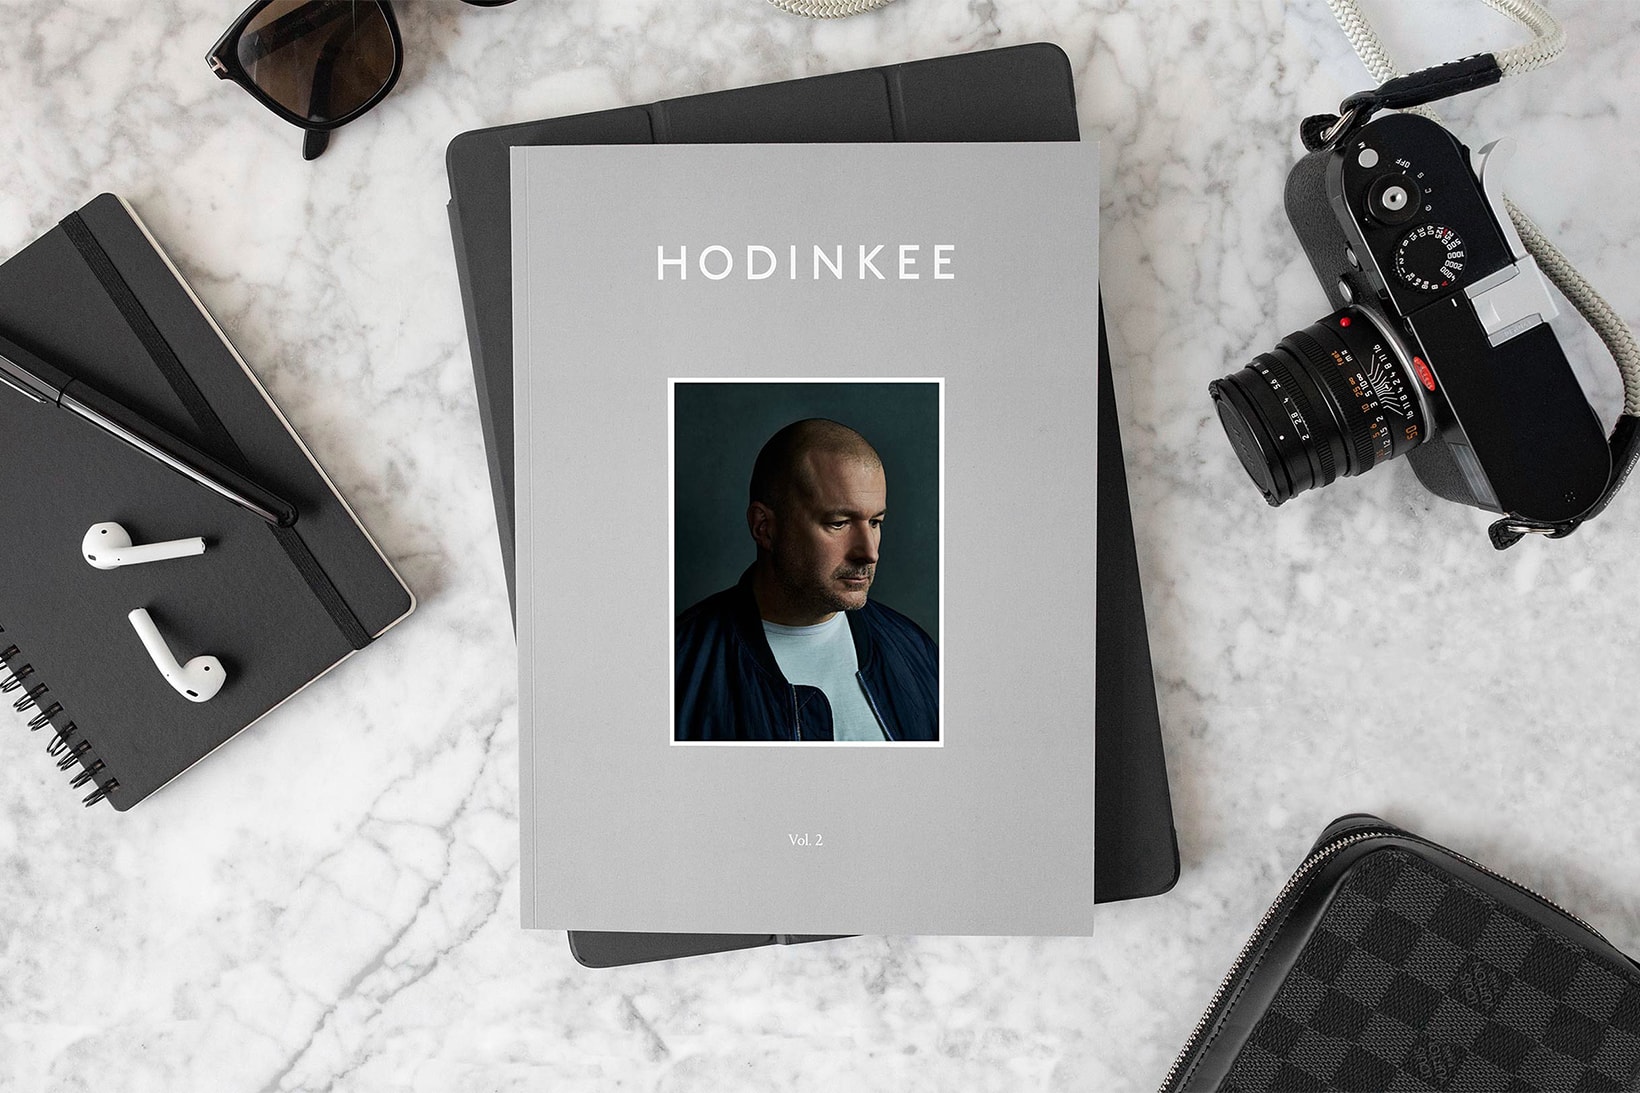 HODINKEE Magazine volume 2 jony ive apple cover story may 2018